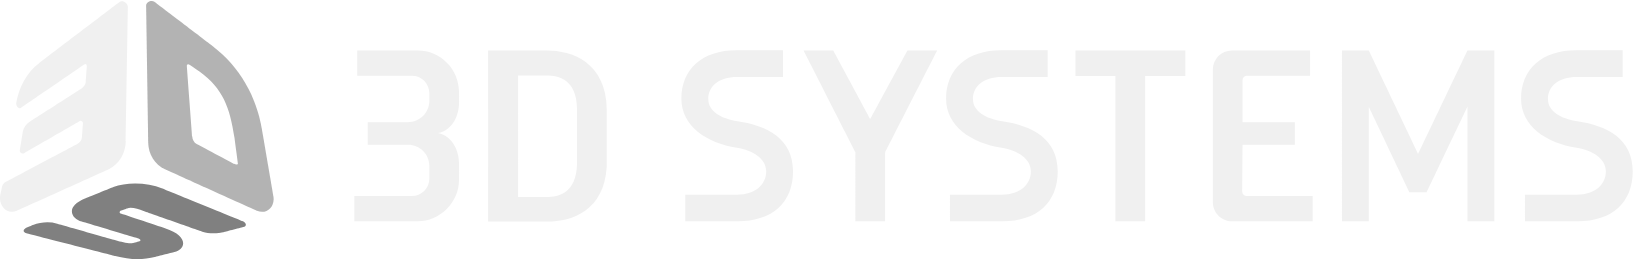 3D Systems logo large for dark backgrounds (transparent PNG)